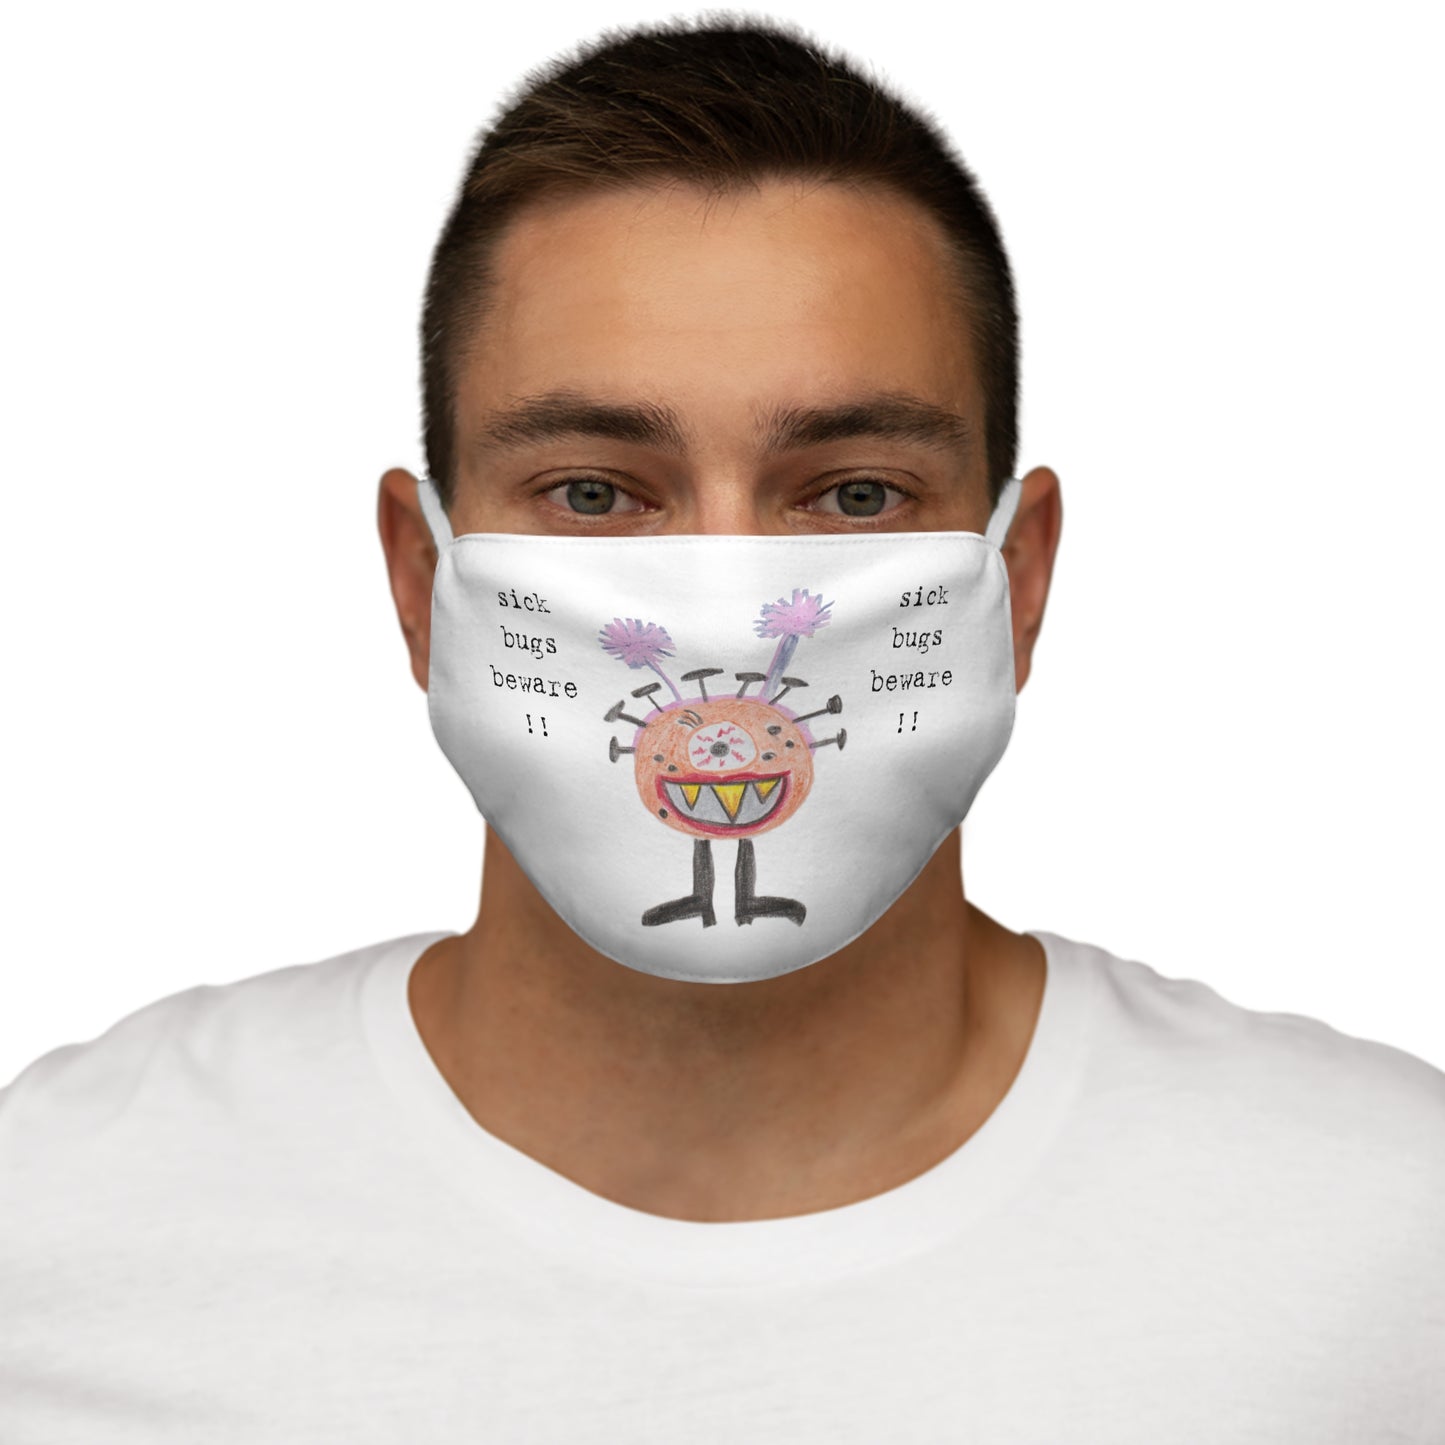 Sick Bugs Beware (2) Adult Face Mask Series